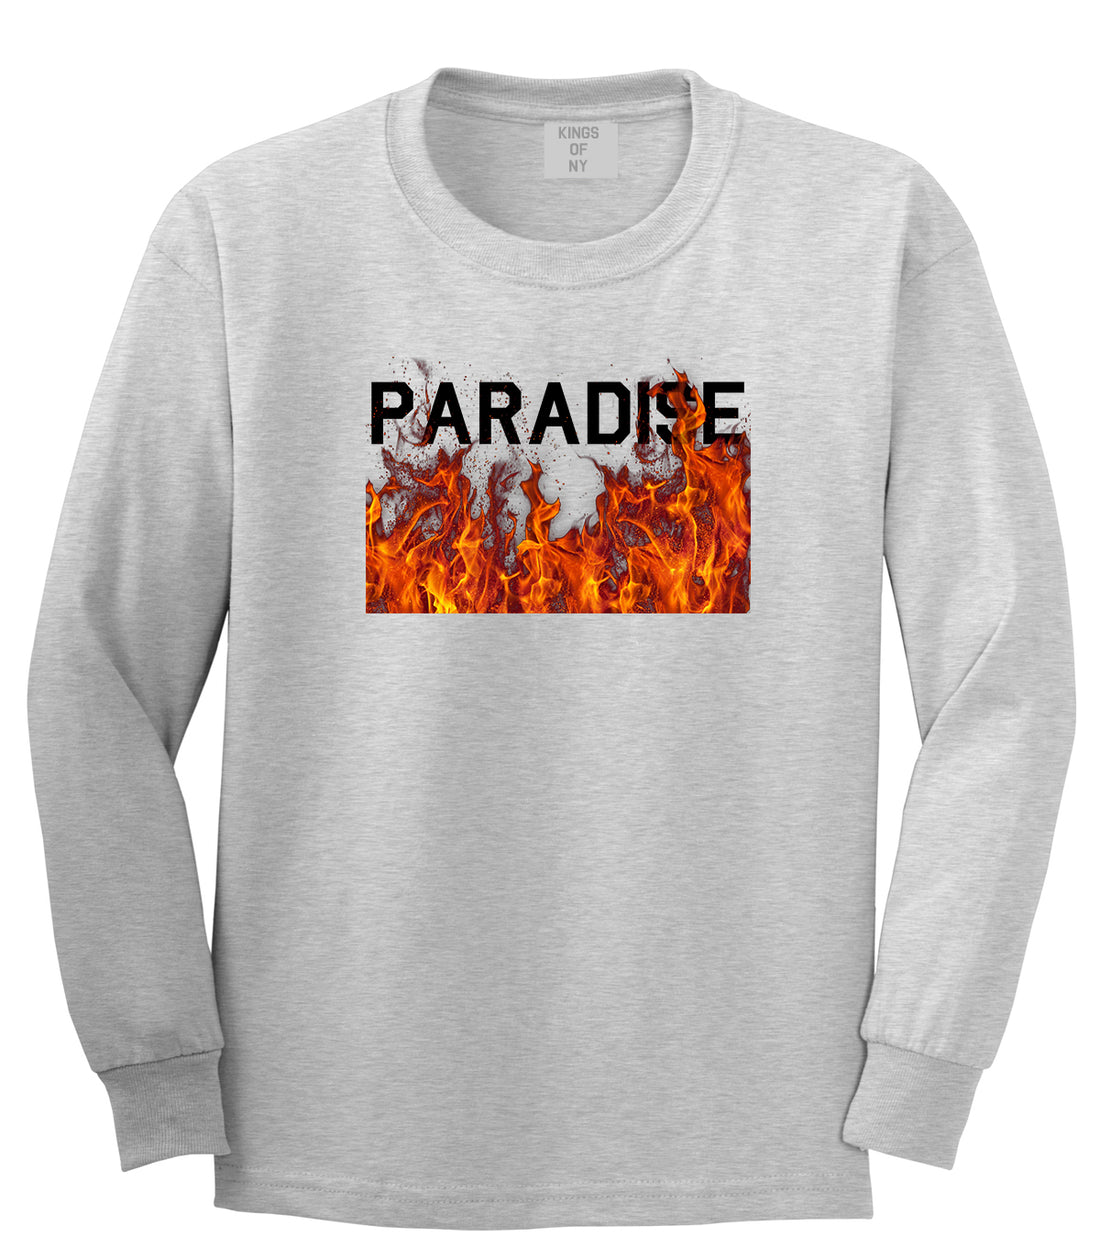 Paradise Fire Mens Long Sleeve T-Shirt Grey by Kings Of NY